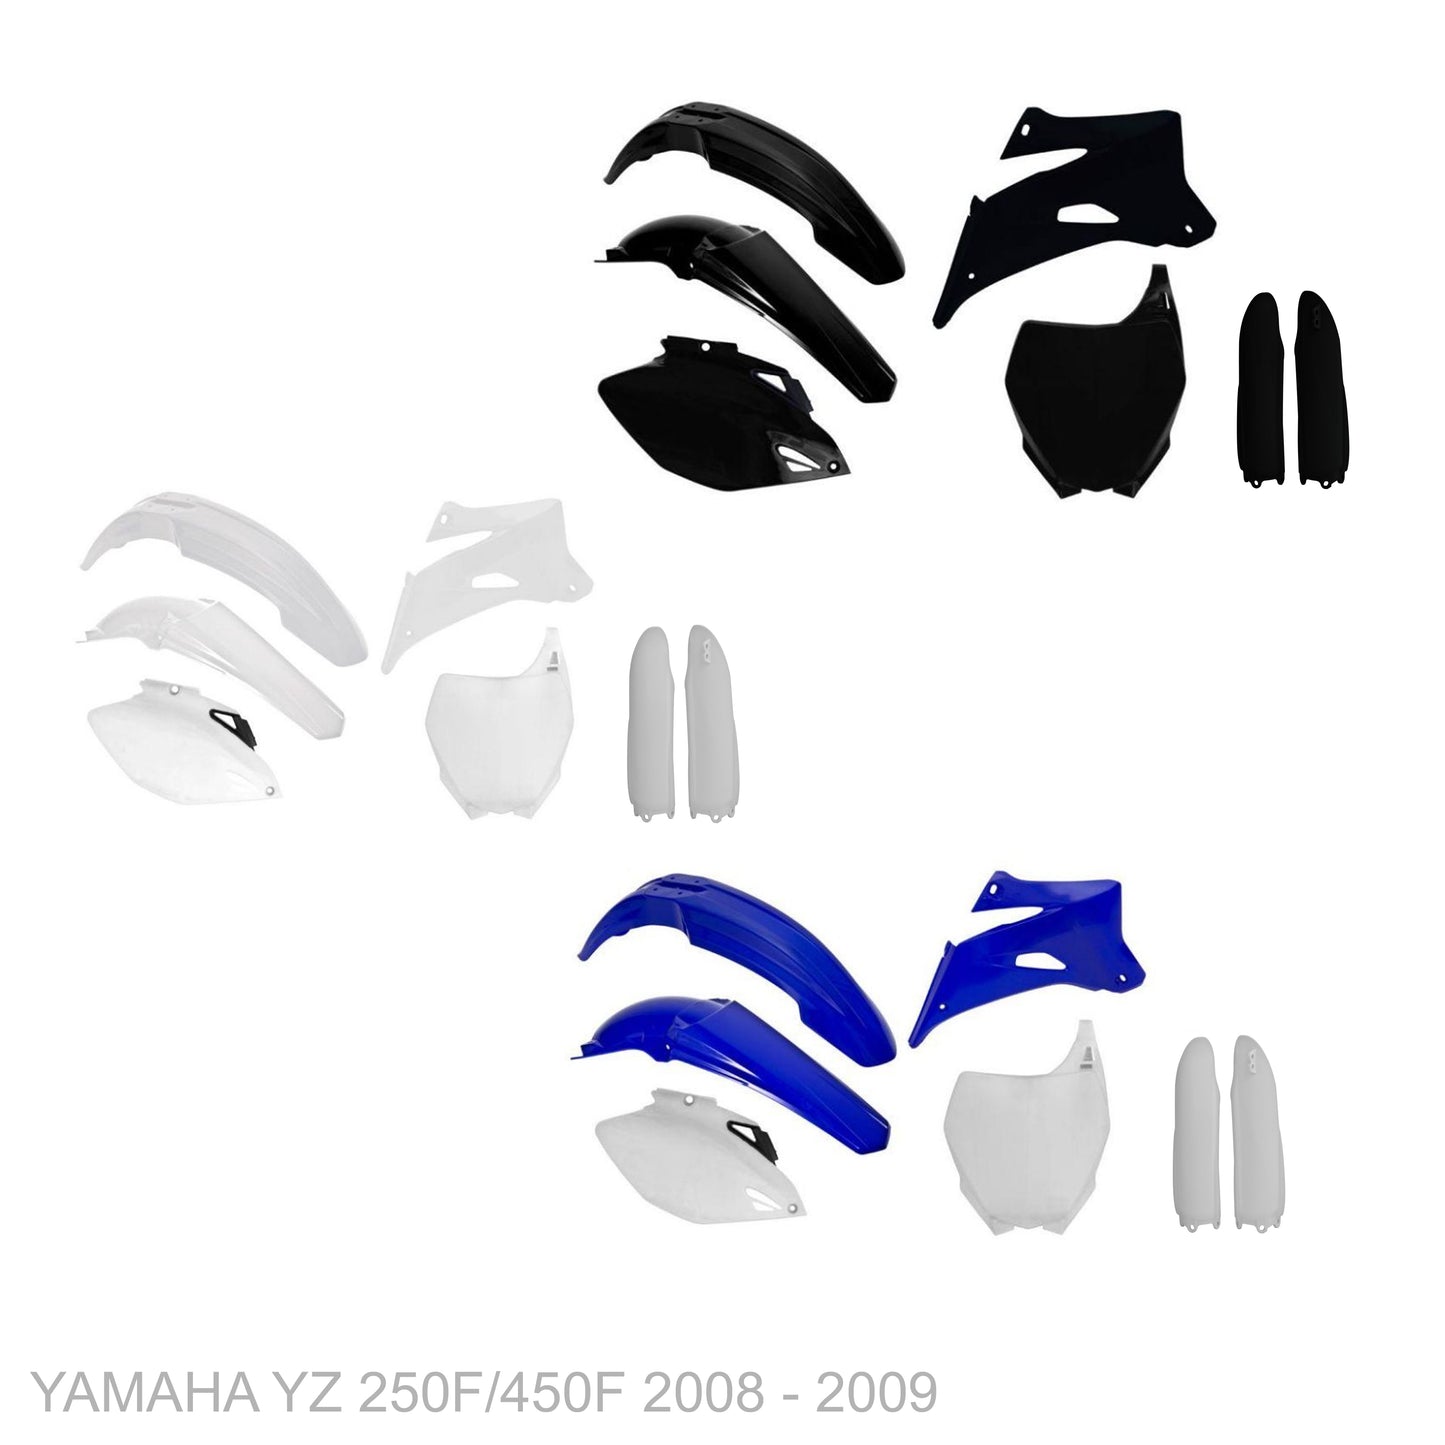 YAMAHA YZ 250F 2008 - 2009 Start From Scratch Graphics Kits